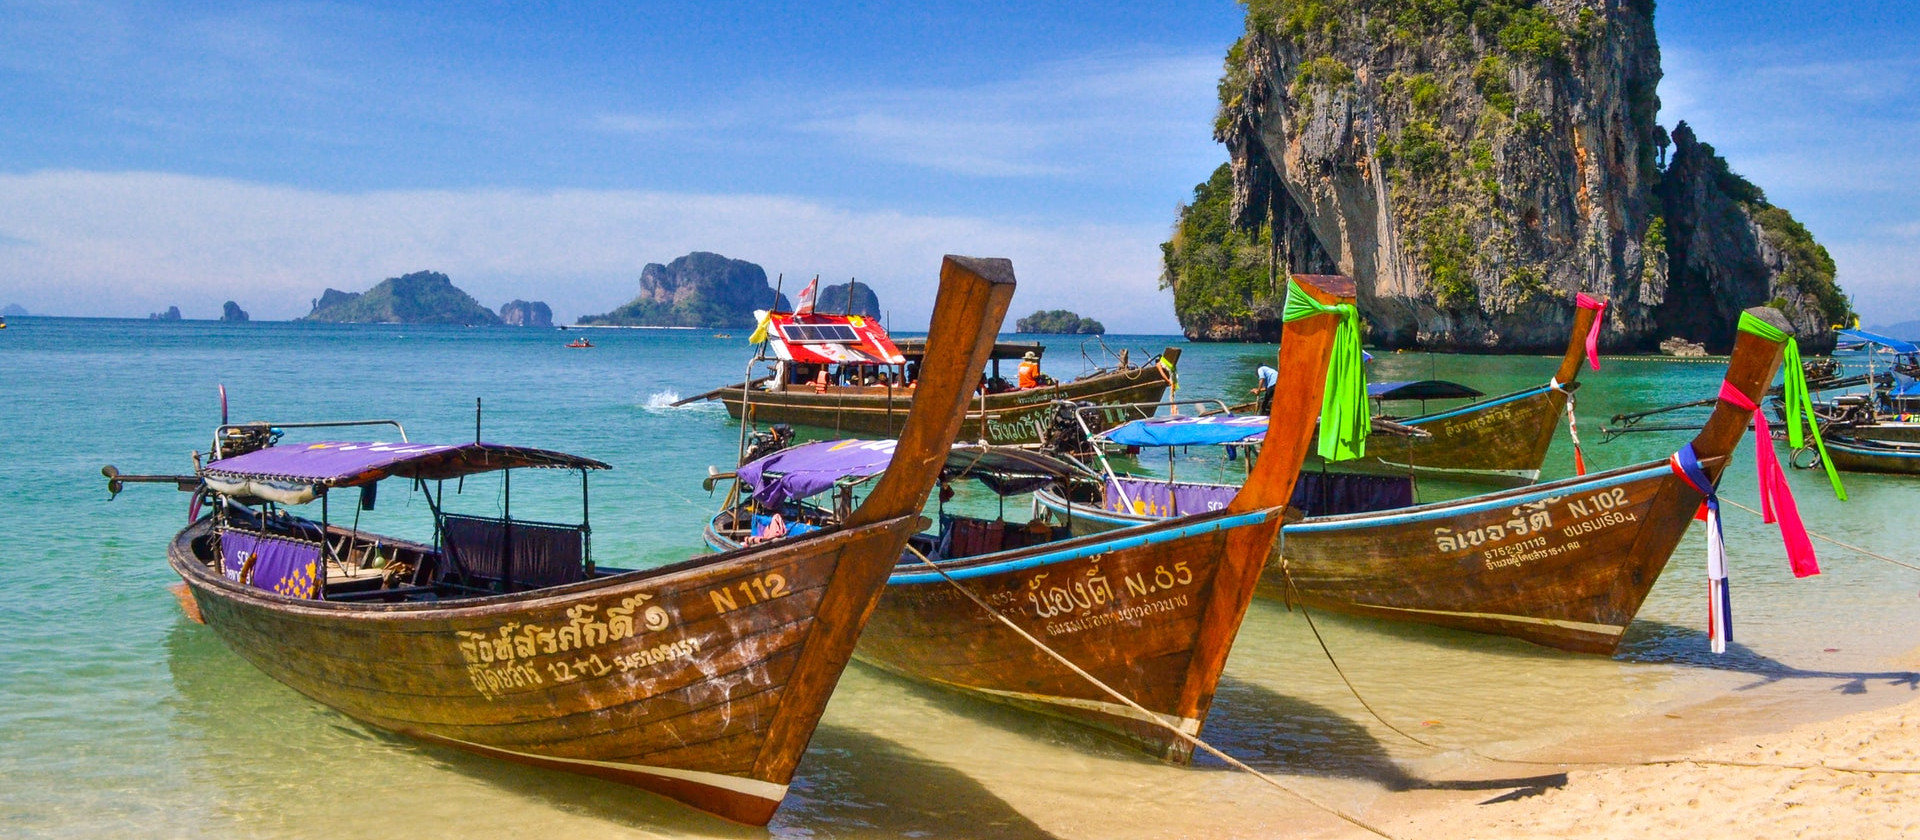 Boats on the shore of Phra Nang Beach, Krabi, Thailand